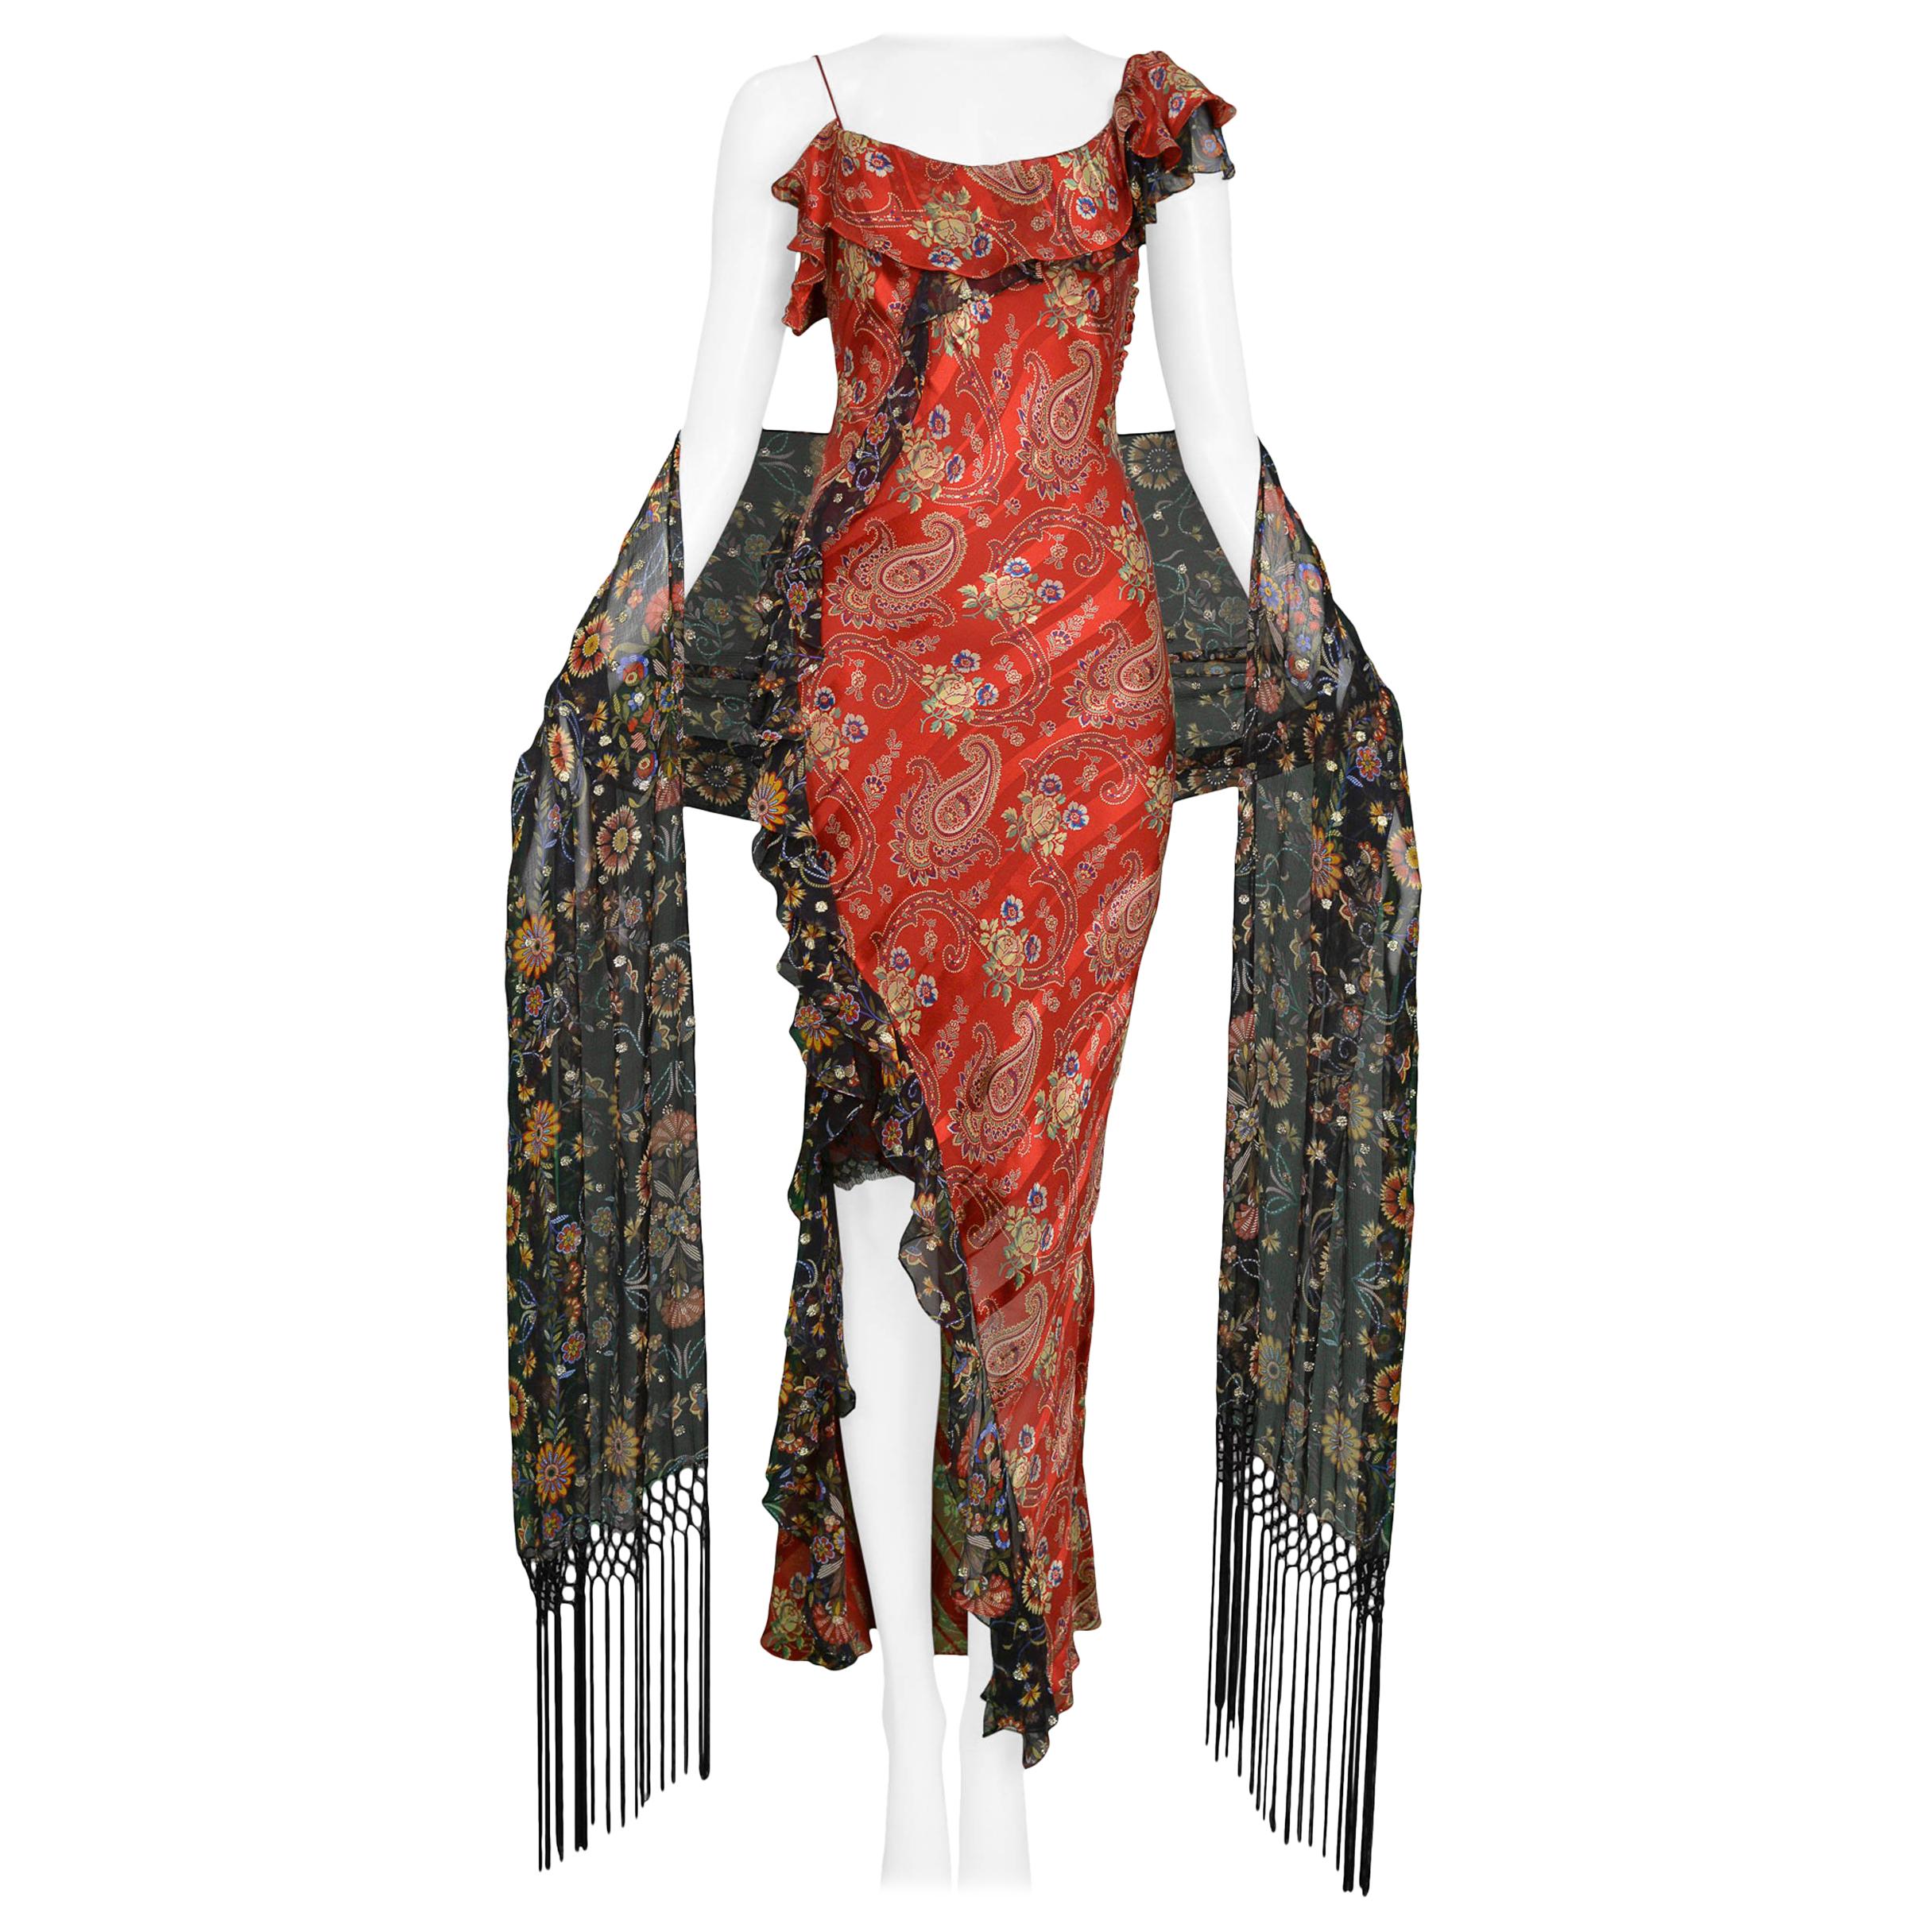 John Galliano for Dior Red Paisley Dress and Shawl Ensemble 